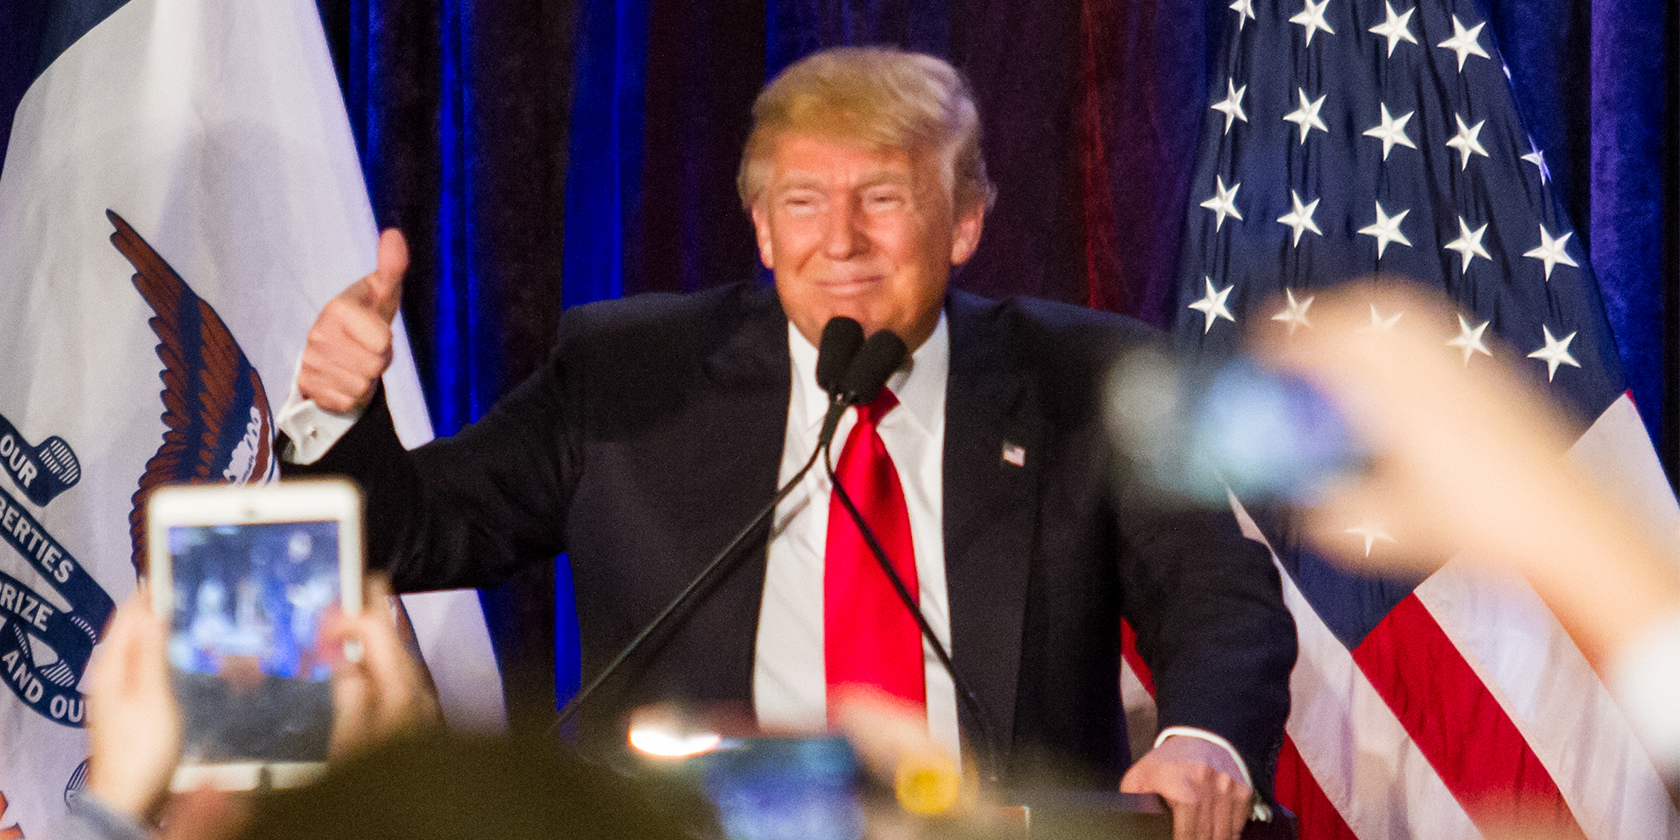 Donald Trump on a podium